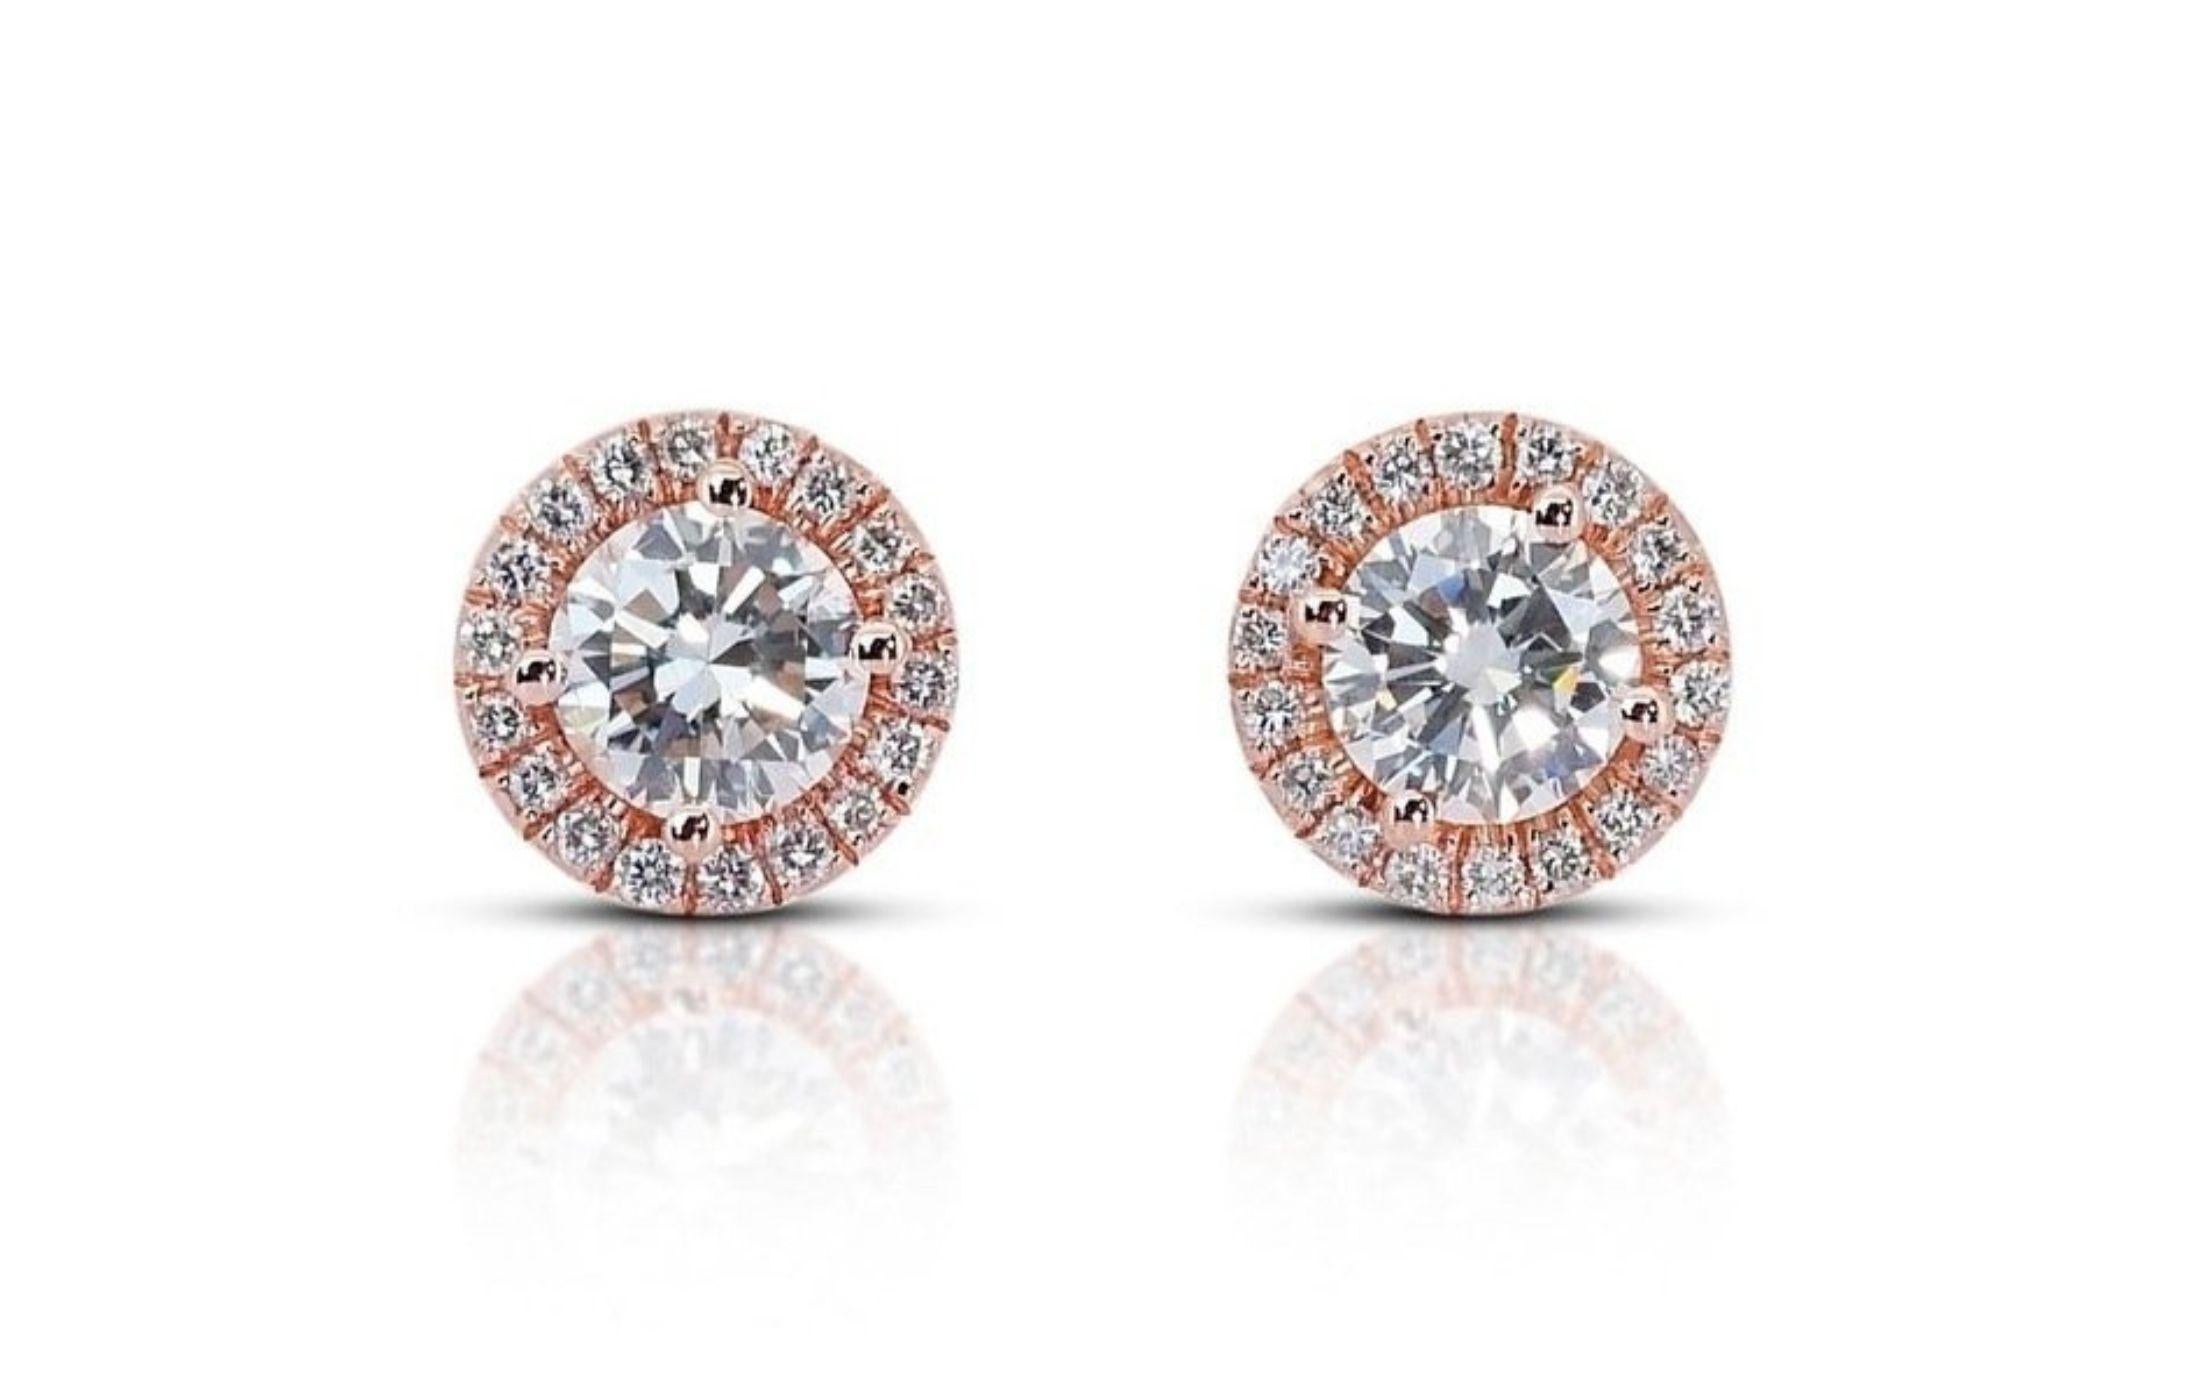 Stunning Diamond Earrings with 1.2 carat Round Brilliant Diamond For Sale 3